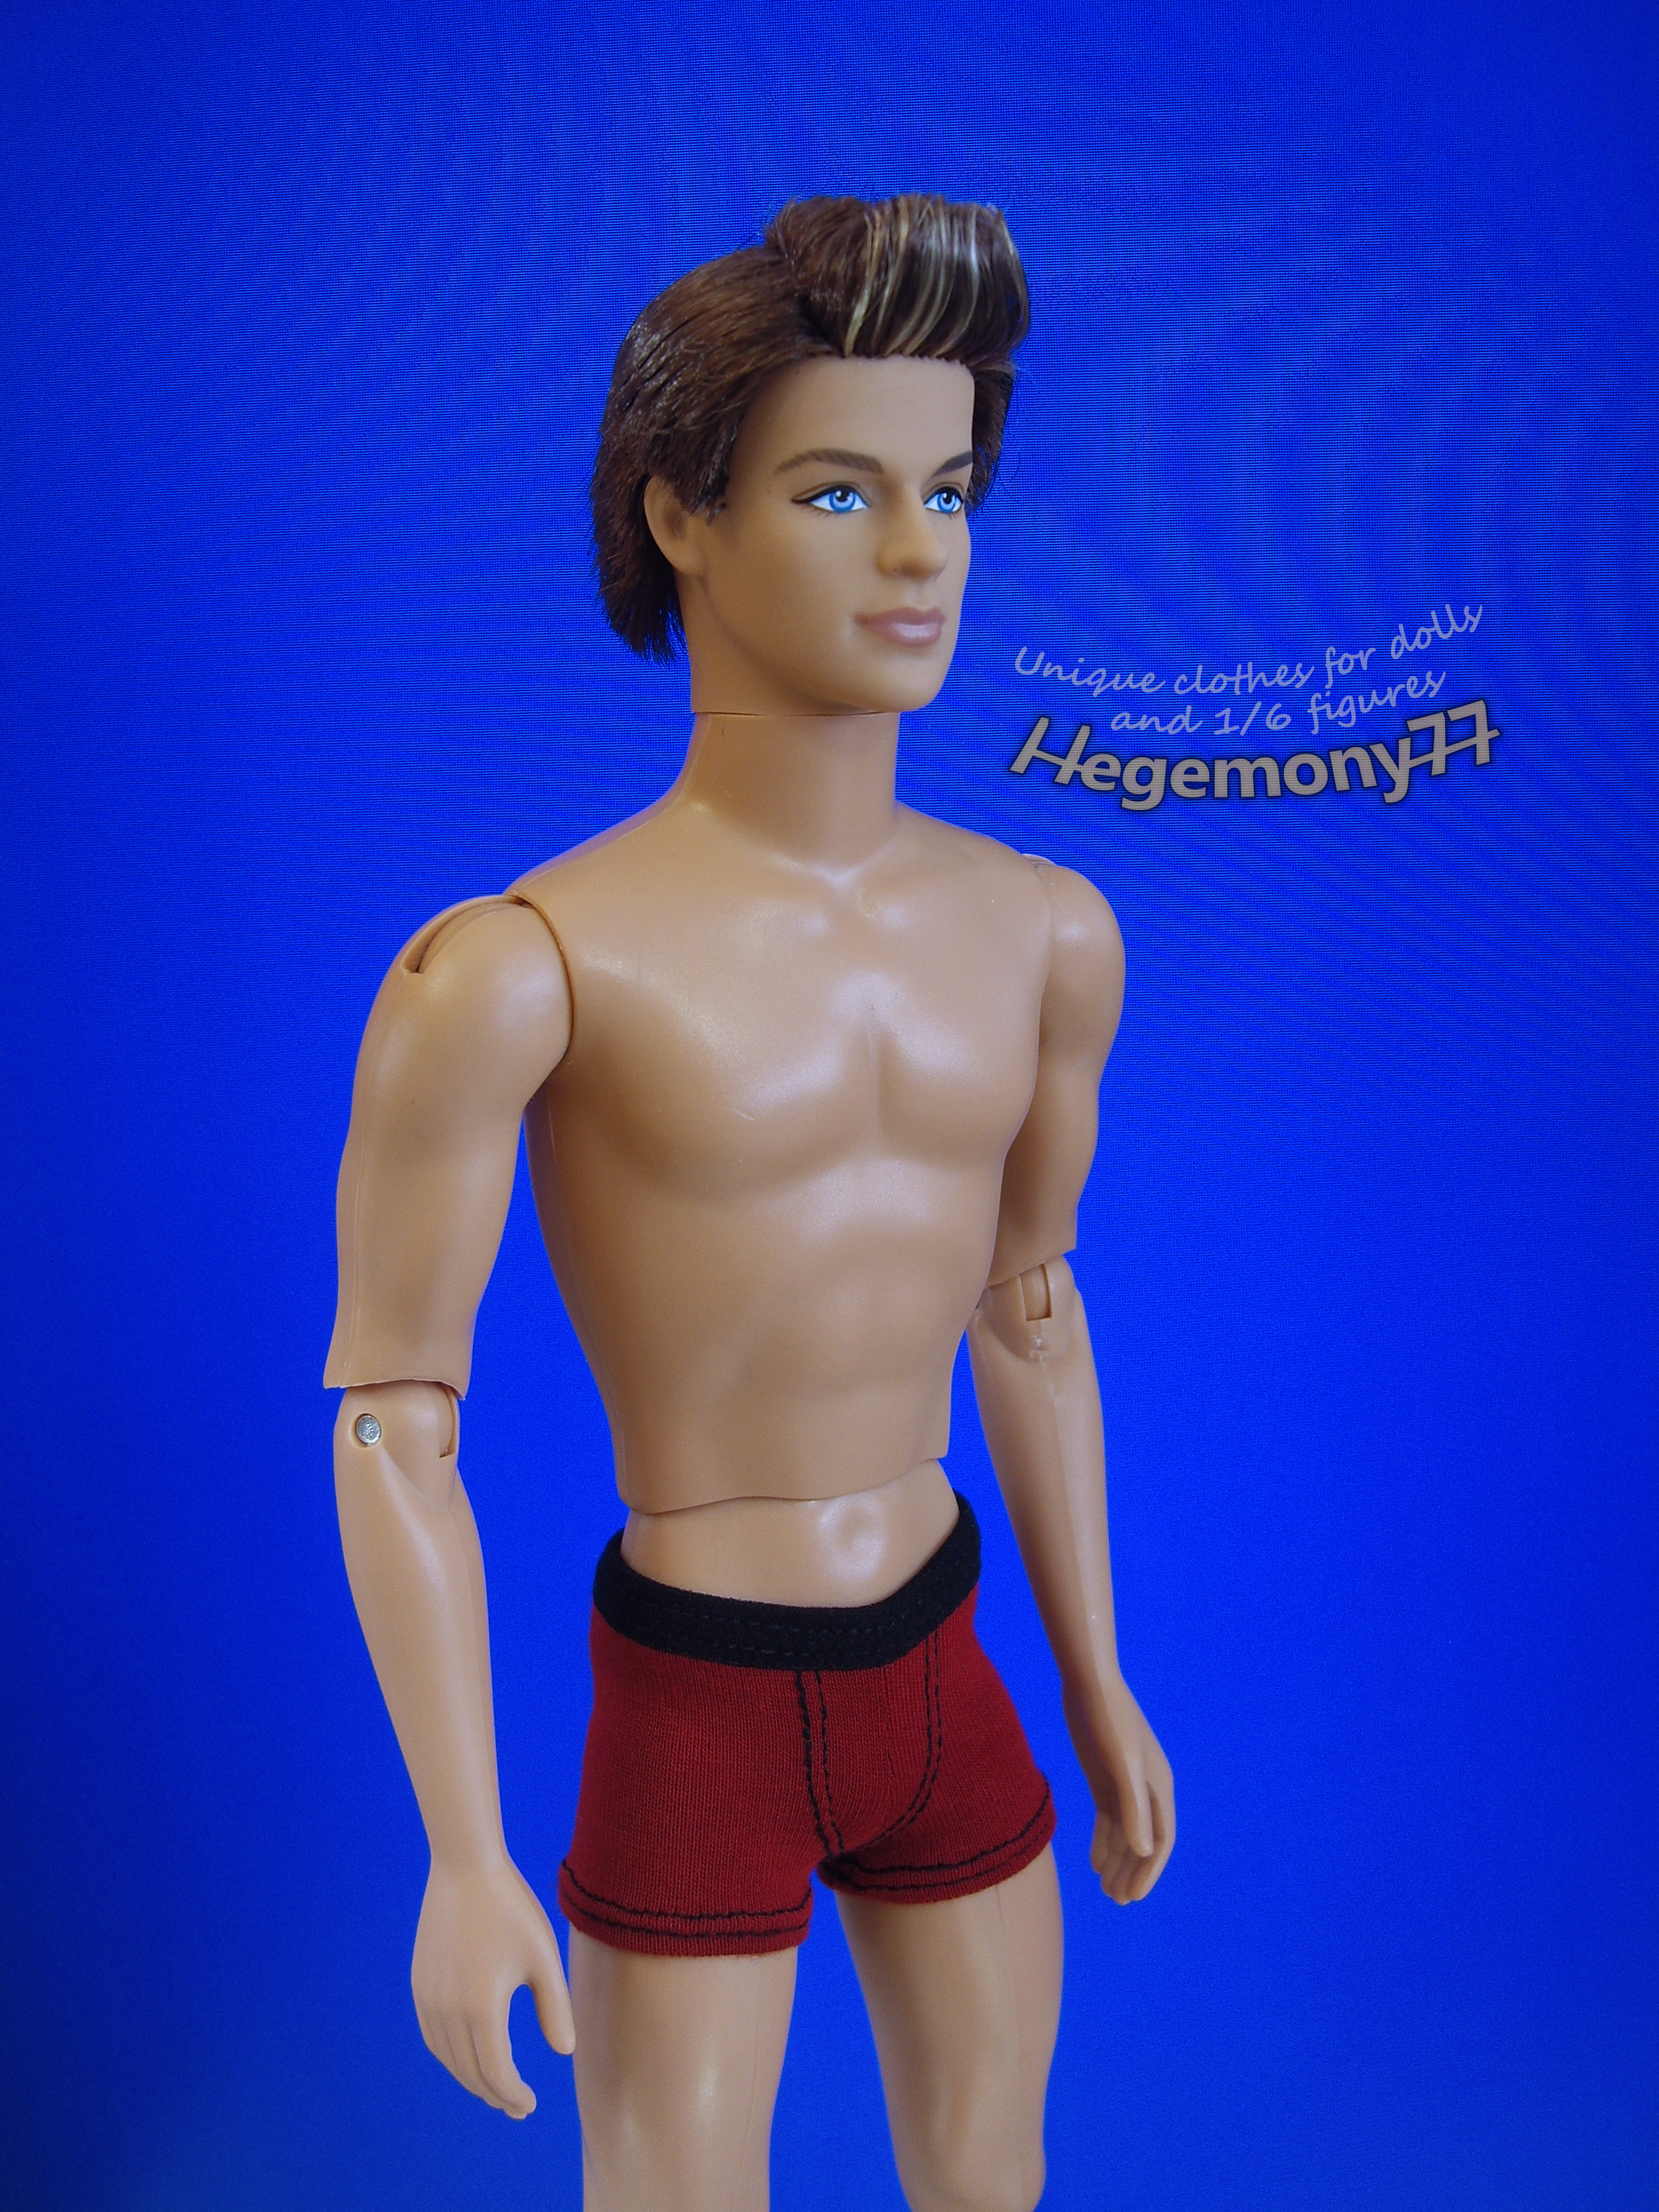 Ken doll in red boxer briefs underwear – Hegemony77 – clothing for